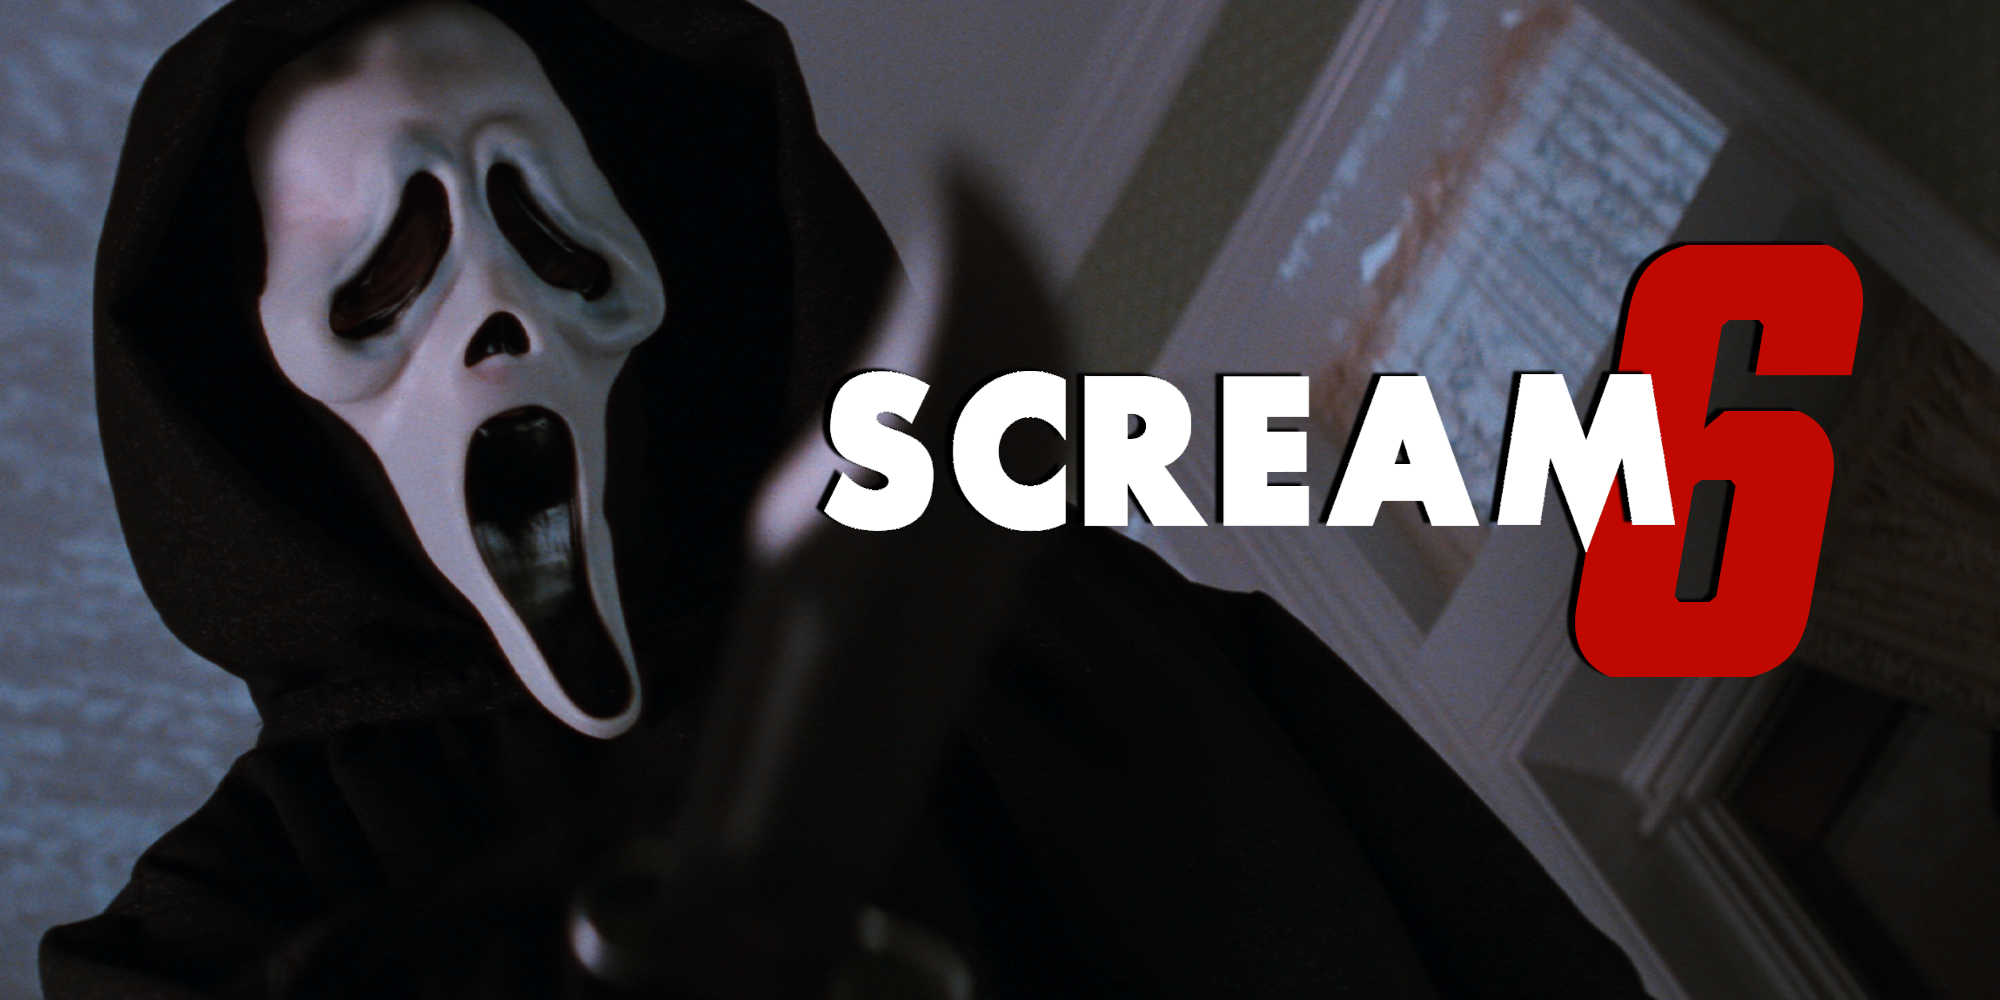 greenscreen #scream #scream6 #ghostface #streaming #horrormovie #horr